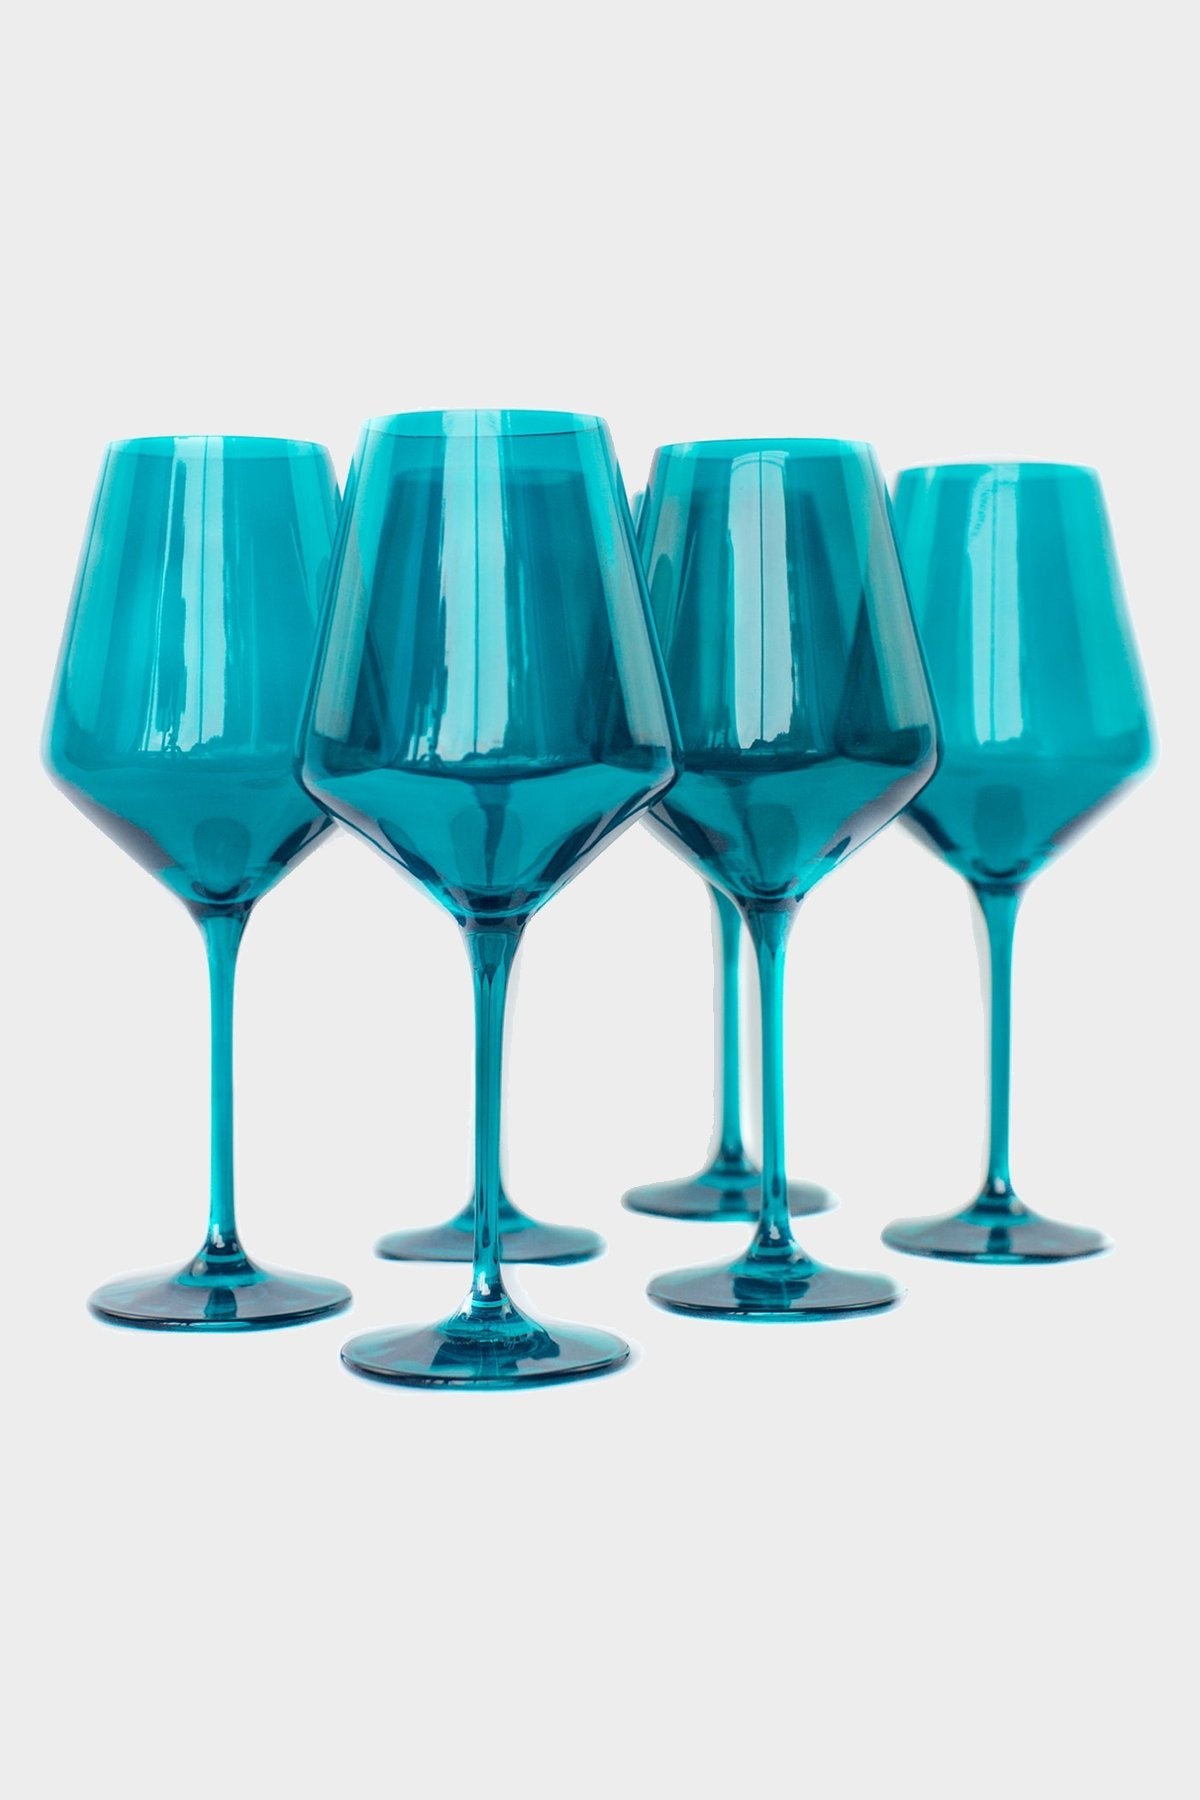 Wine Stemware Glass in Emerald Green - Set of 6 - shop-olivia.com